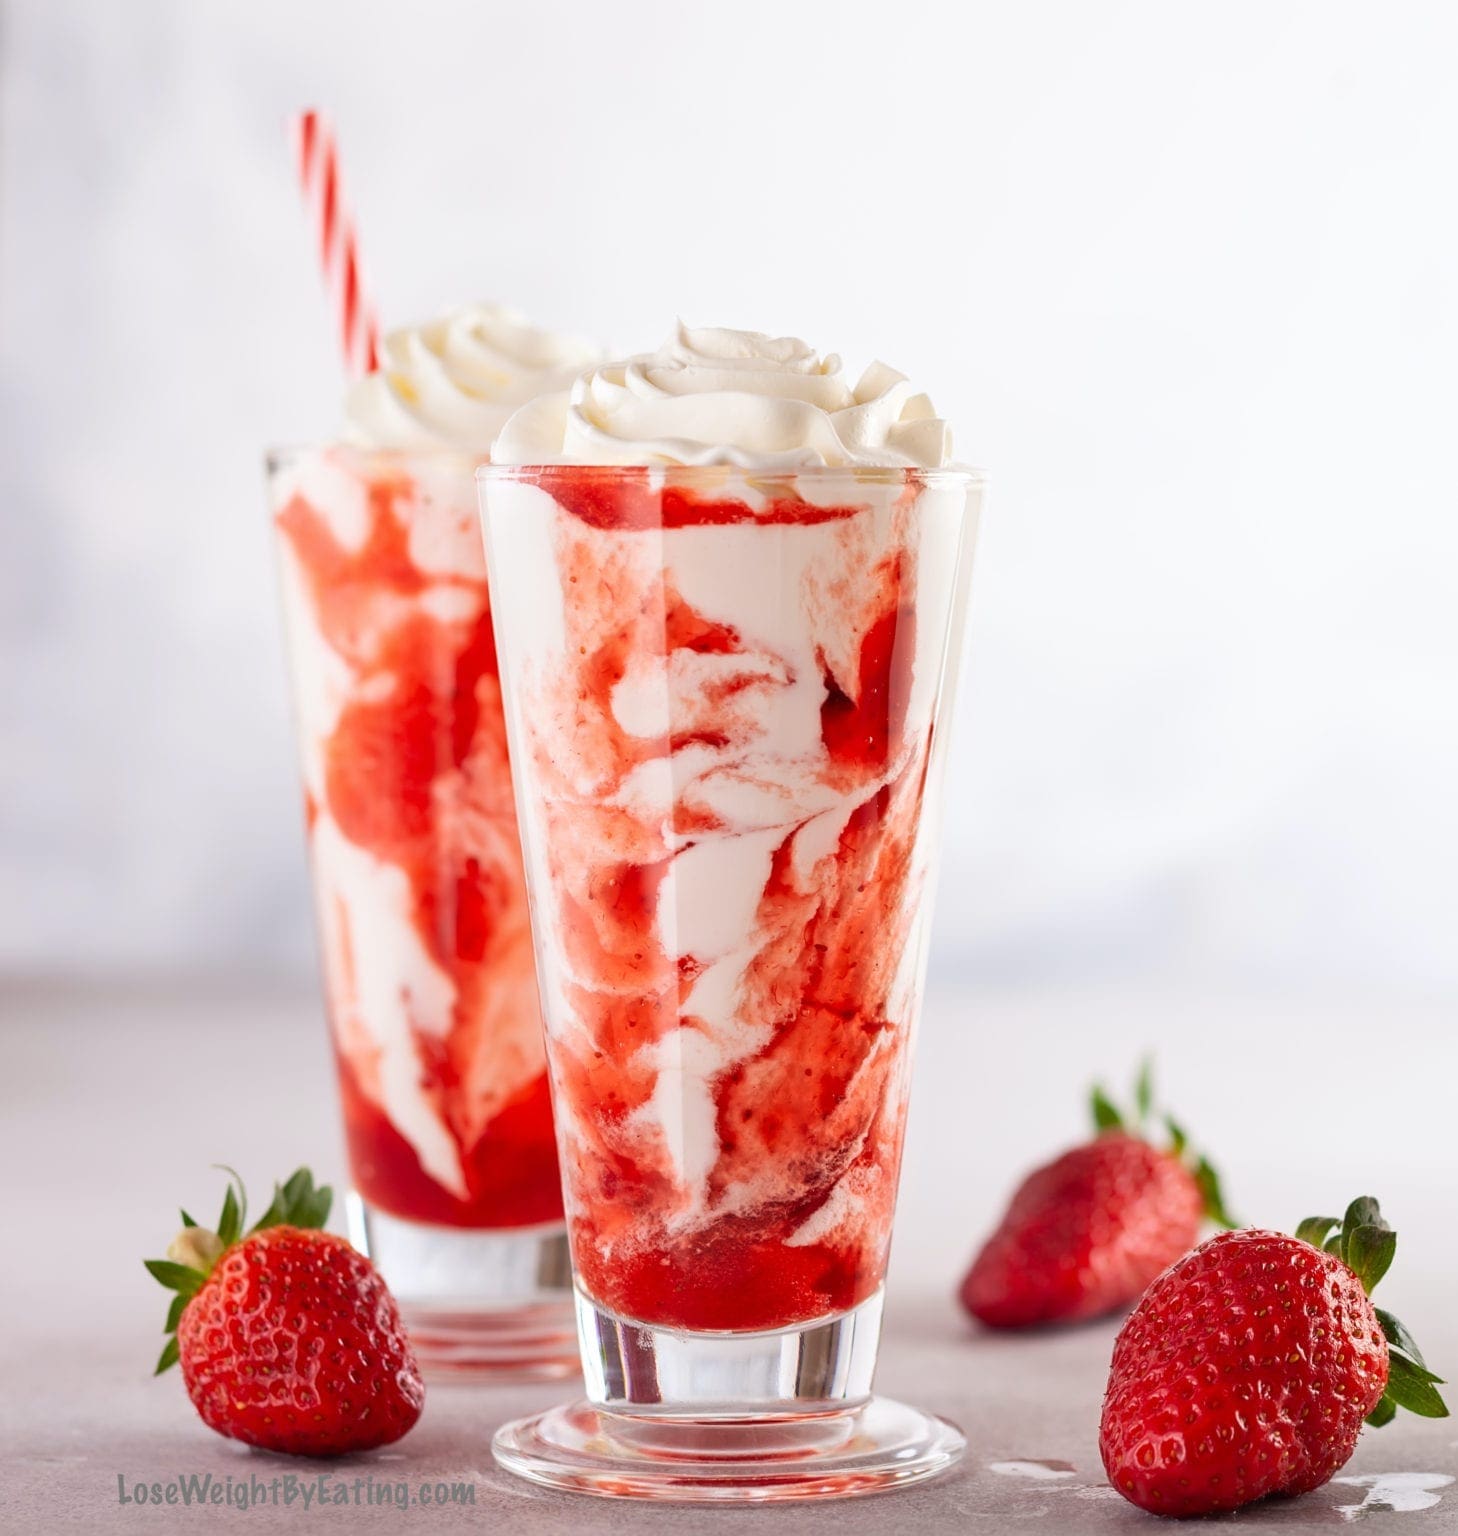 Skinny Homemade Milkshakes Recipes Chocolate Strawberry Vanilla